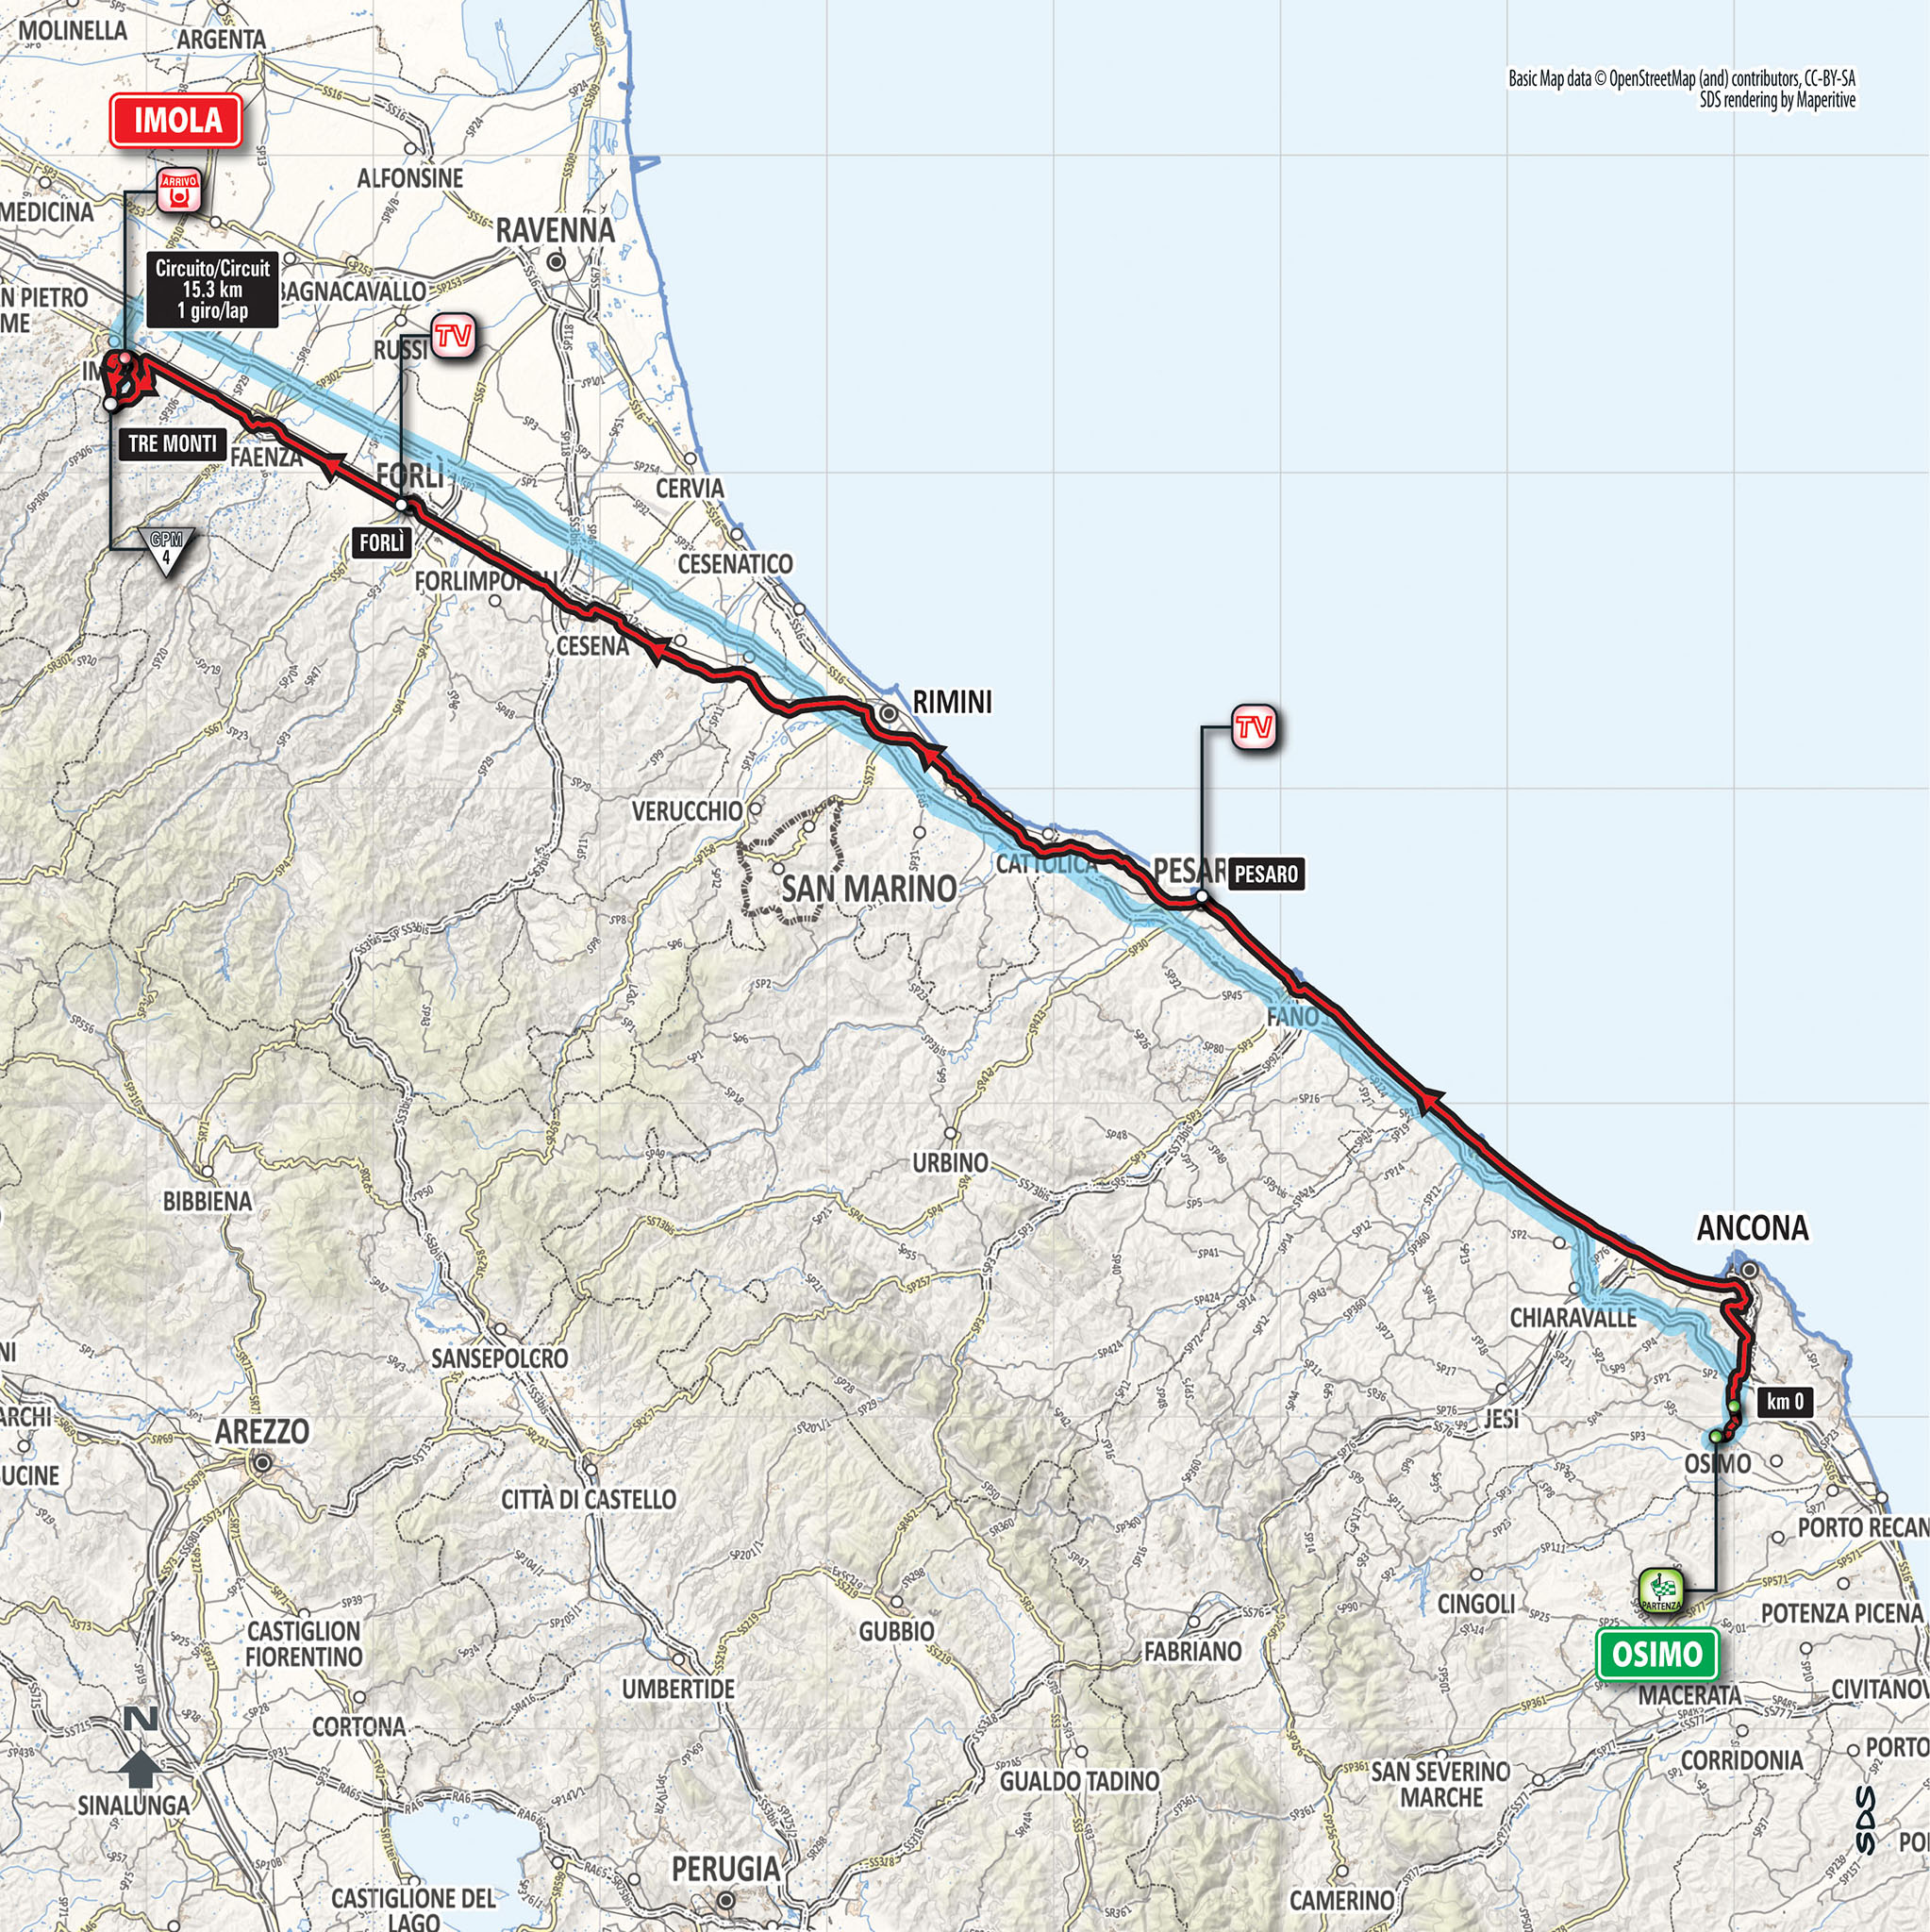 Parcours étape 12 Giro 2018